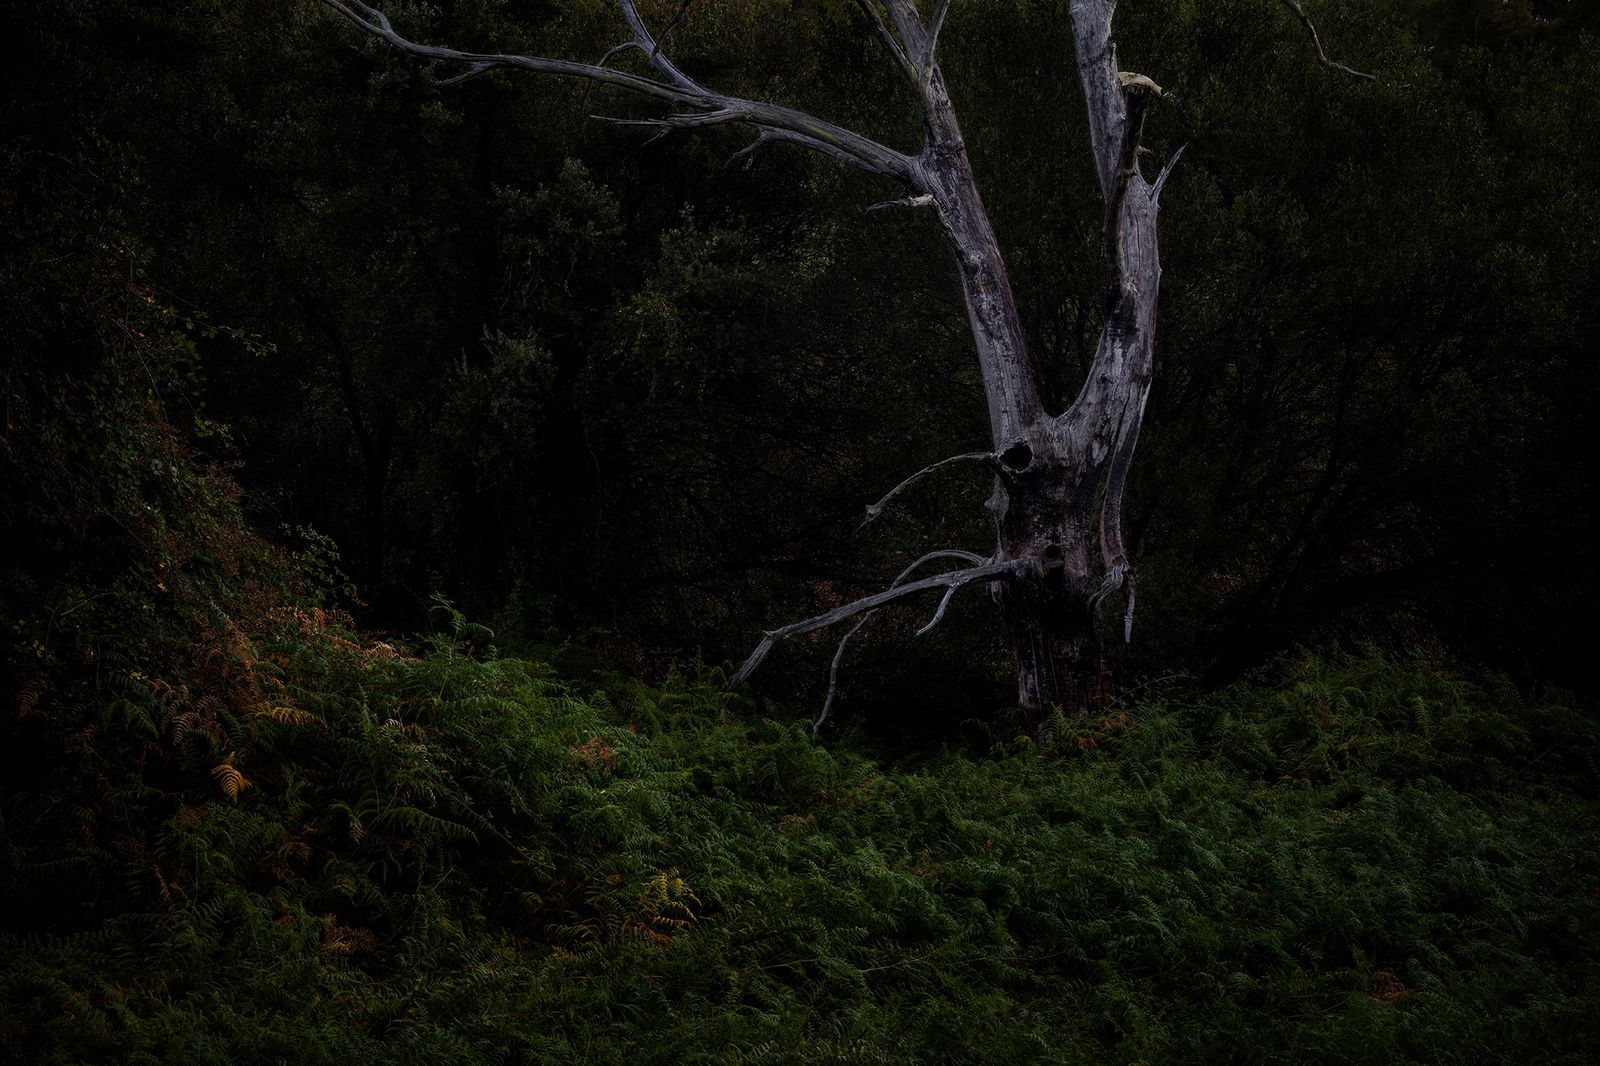 © Oskar Alvarado - Image from the Where Fireflies Unfold photography project